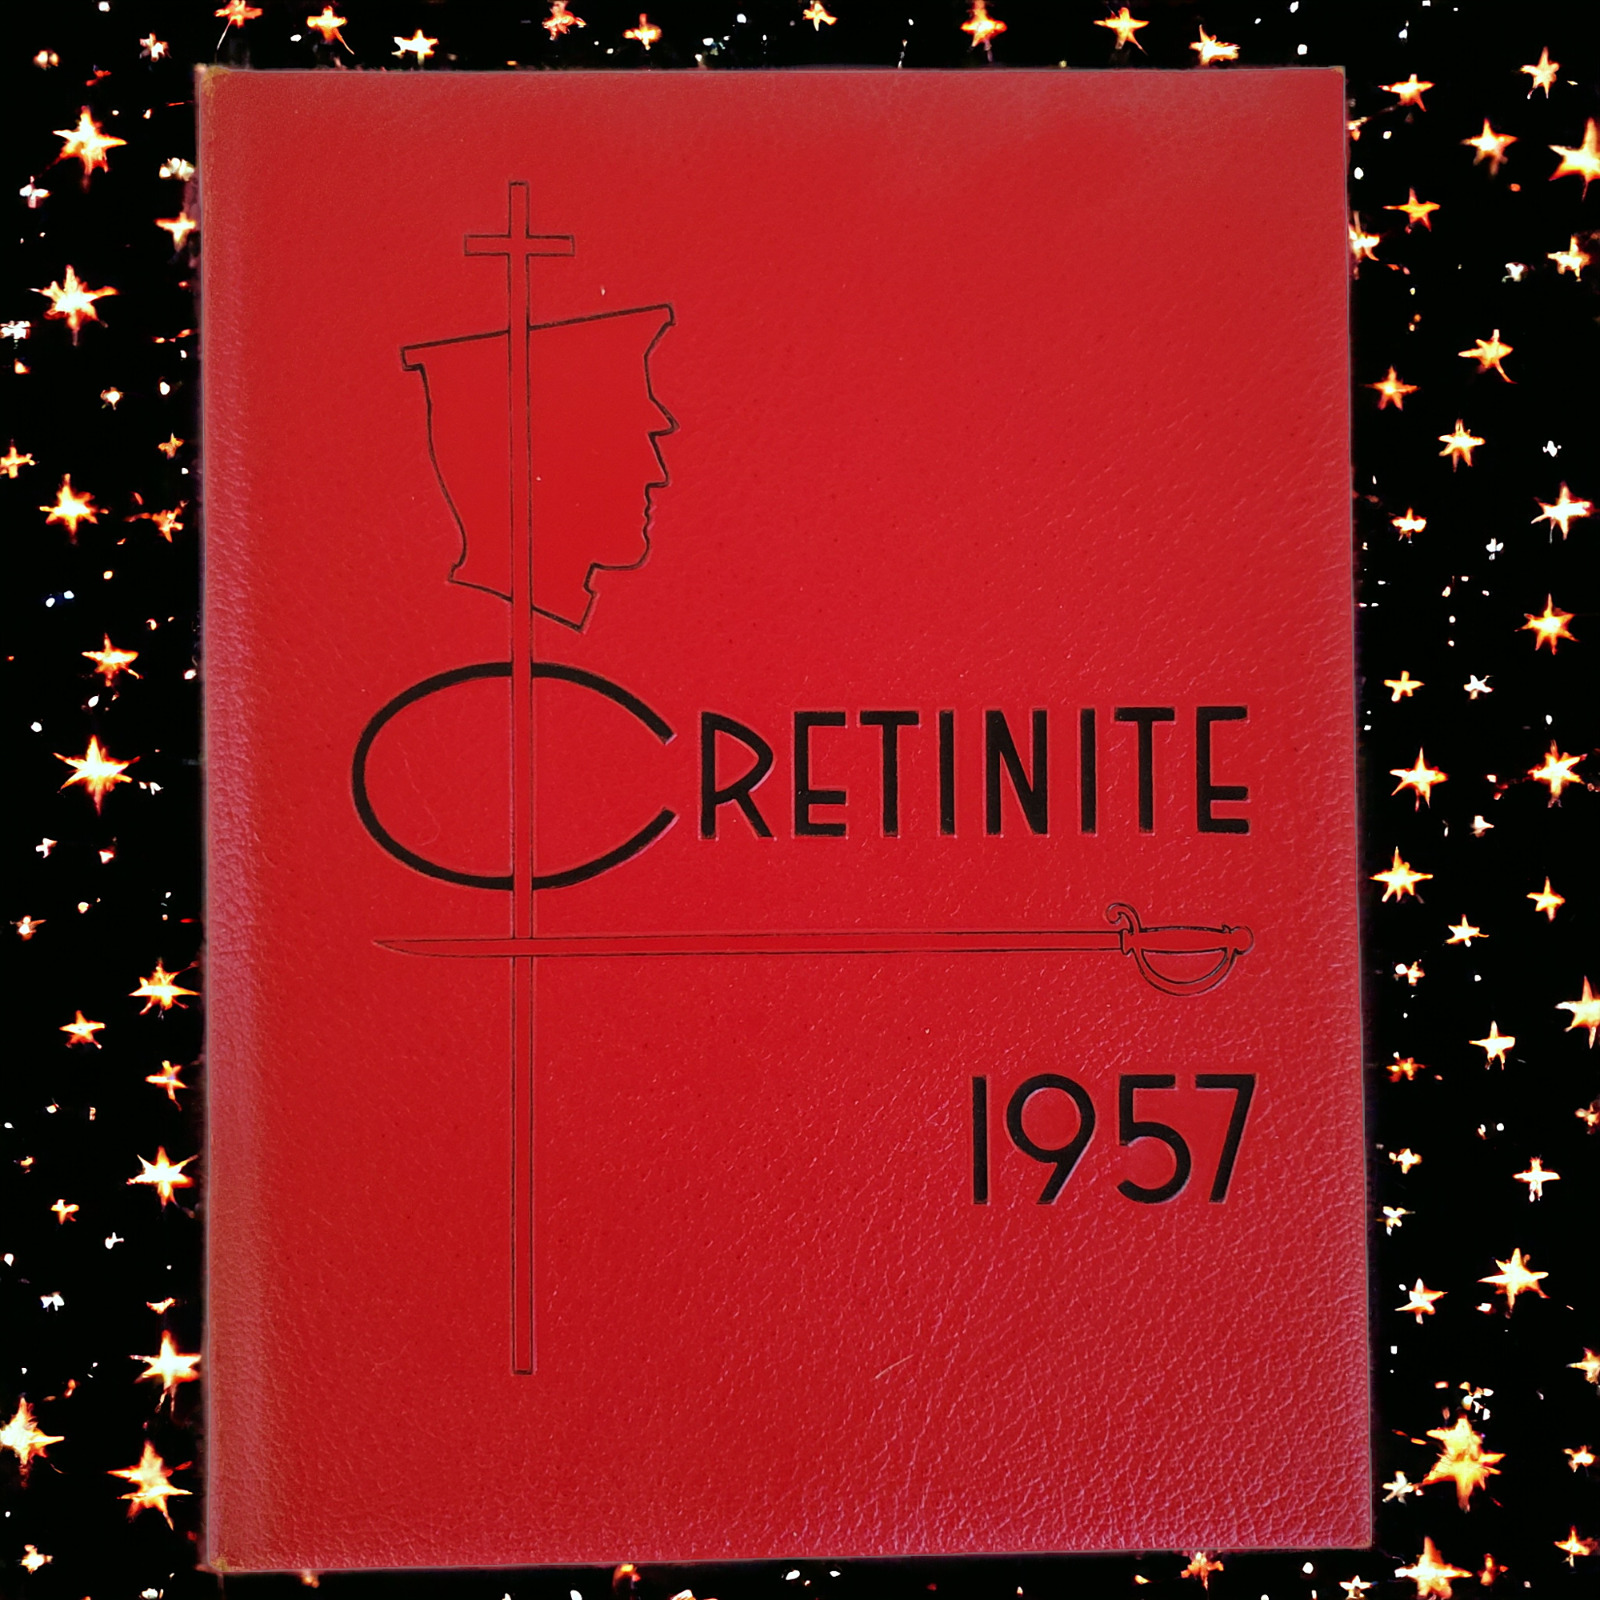 1957 Cretinite Cretin High School Yearbook St Paul Minnesota Signed VTG Original